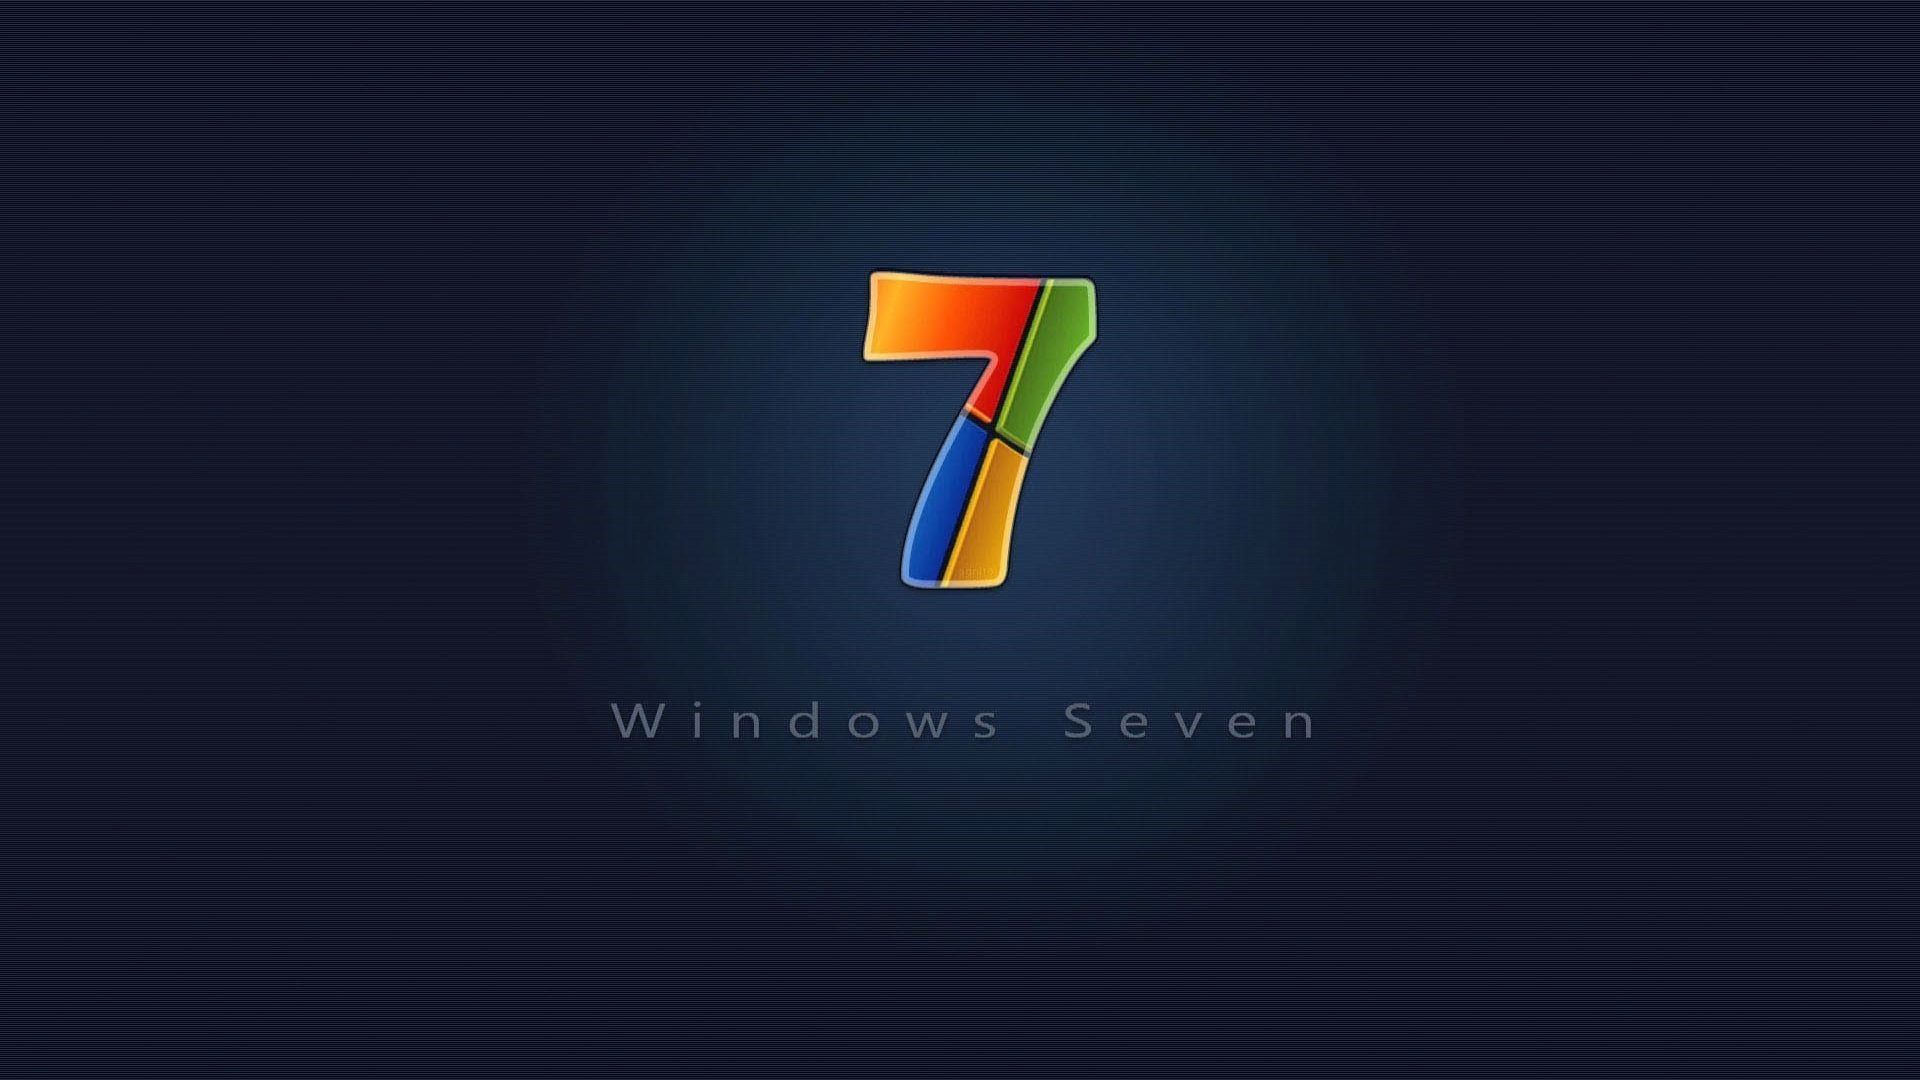 Windows 7, 1920x1080 HD Wallpaper and FREE Stock Photo